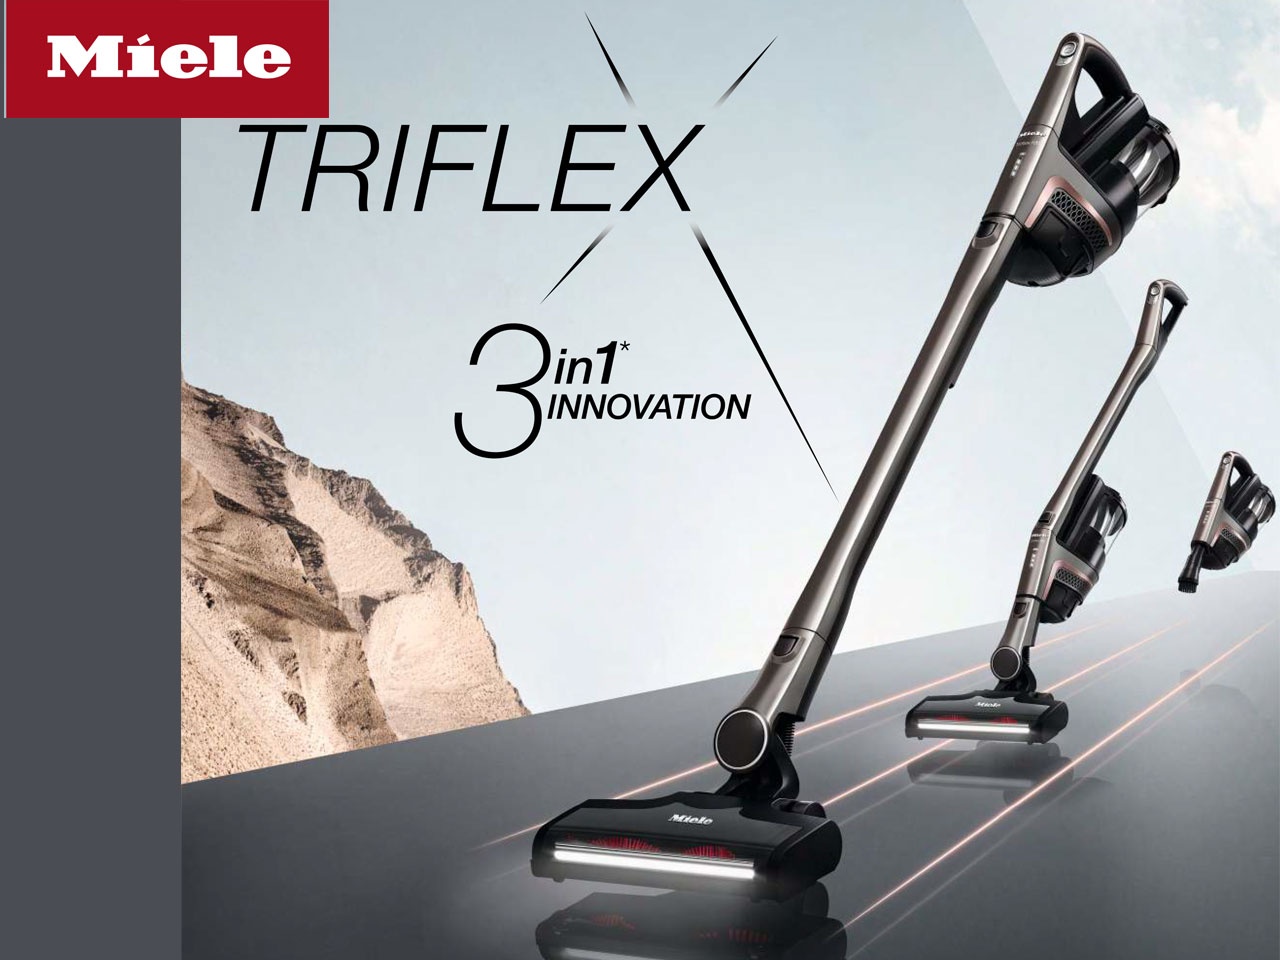 MIELE propose TRIFLEX un aspirateur balai sans fil innovant 3 en 1